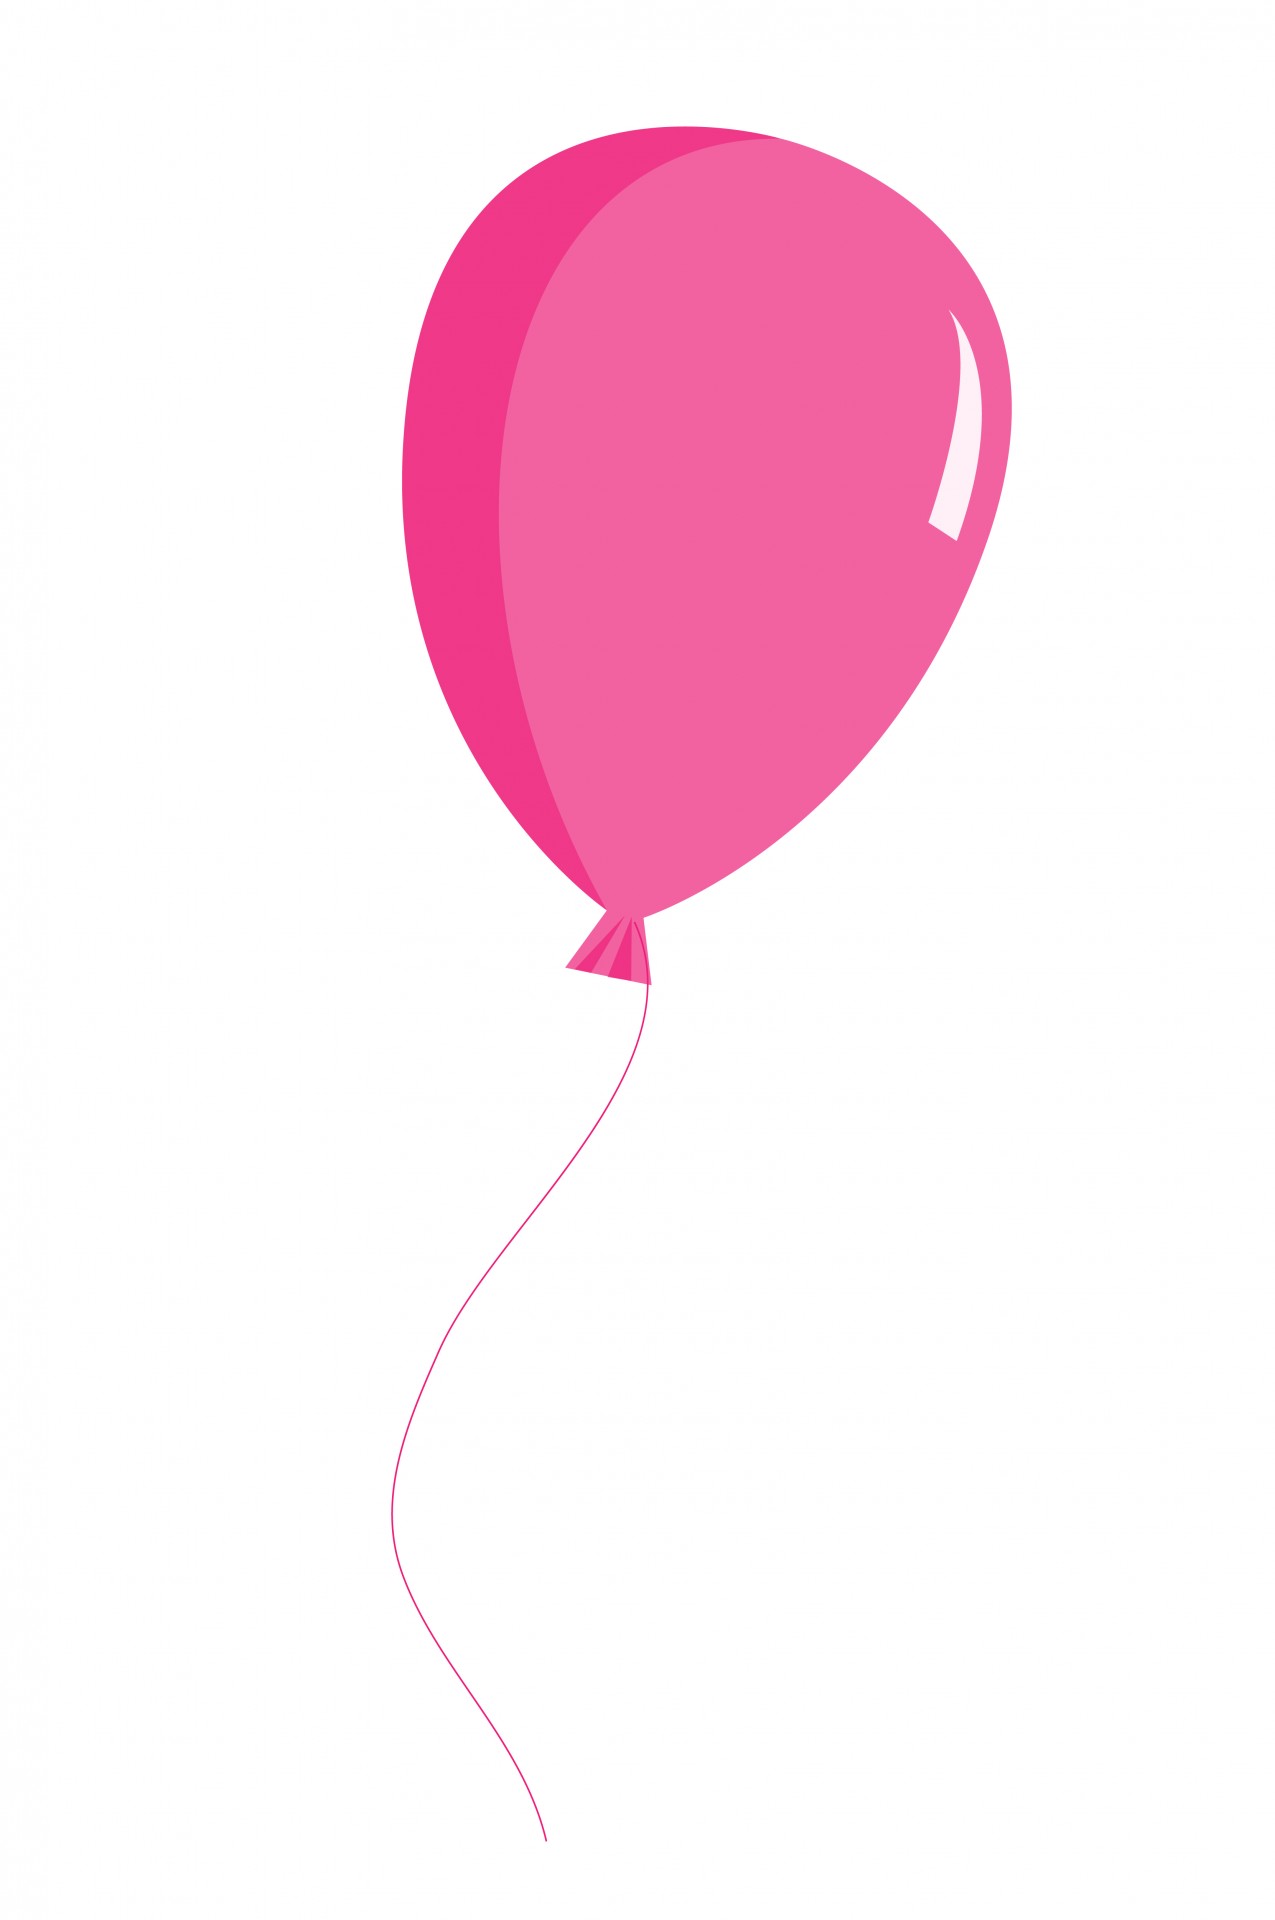 Pink clipart. Balloon free stock photo